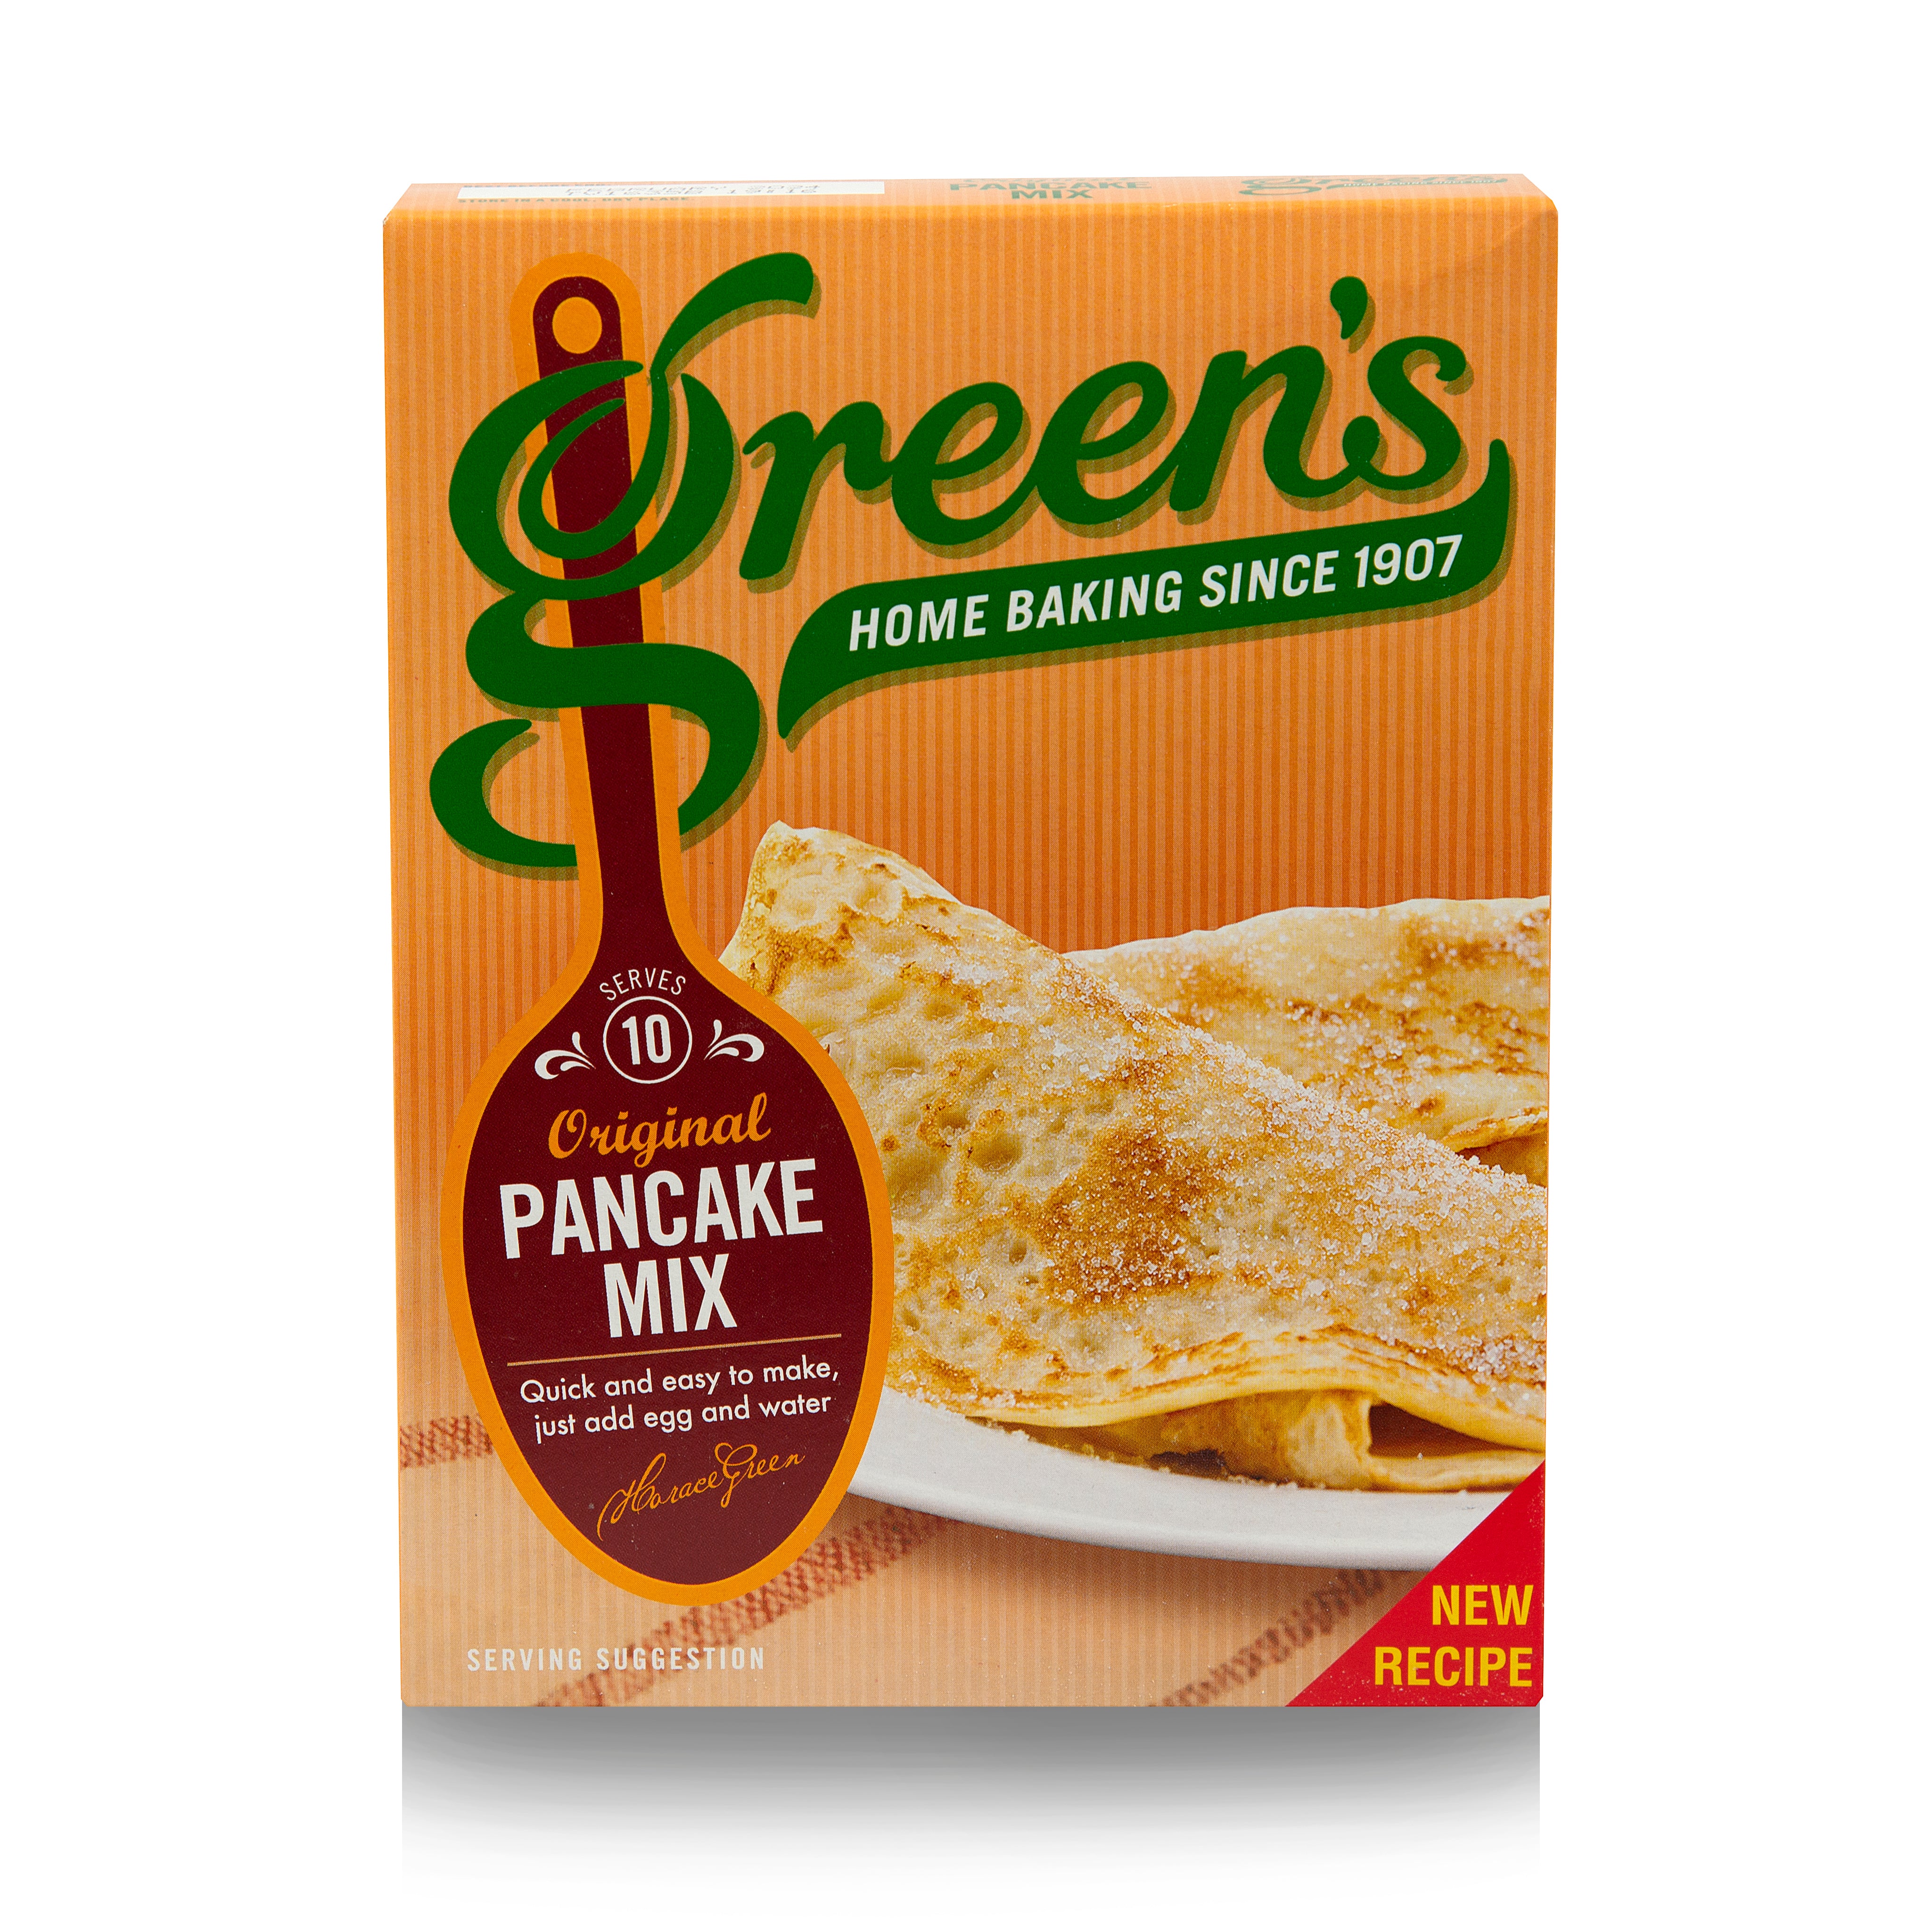 Green's Original Pancakes Mix 232g - Pack of 6